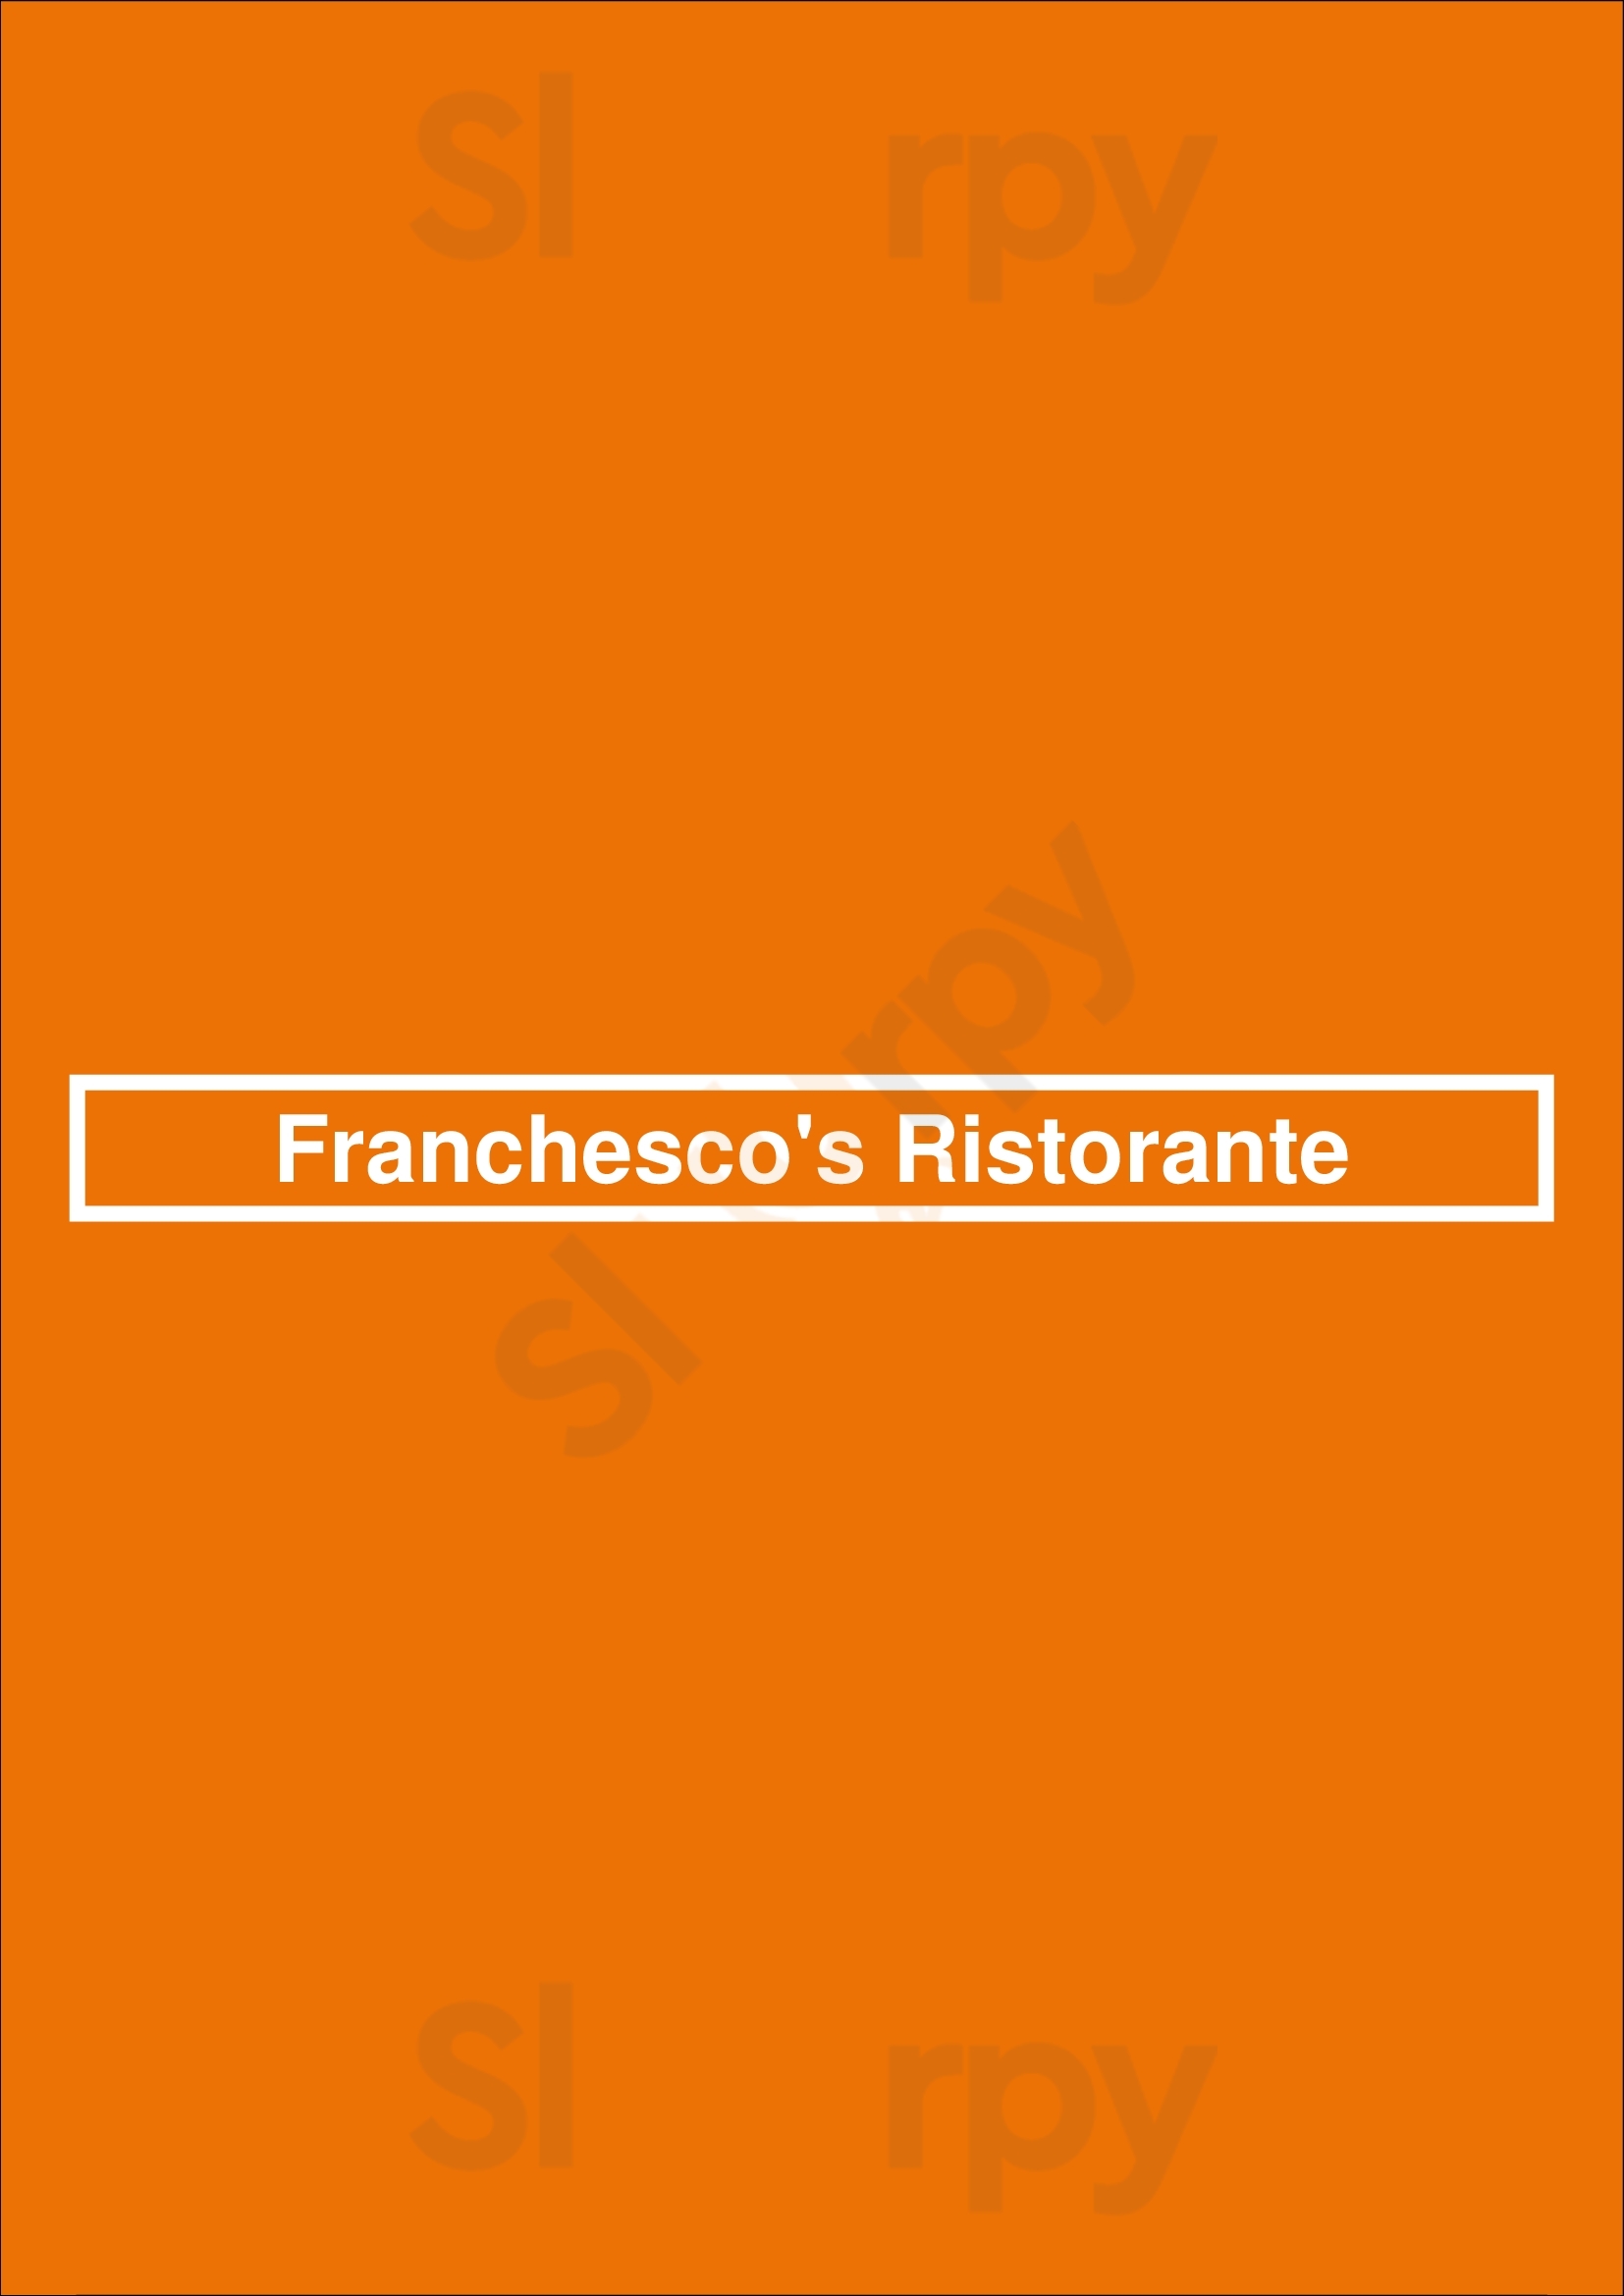 Franchesco's Ristorante Rockford Menu - 1